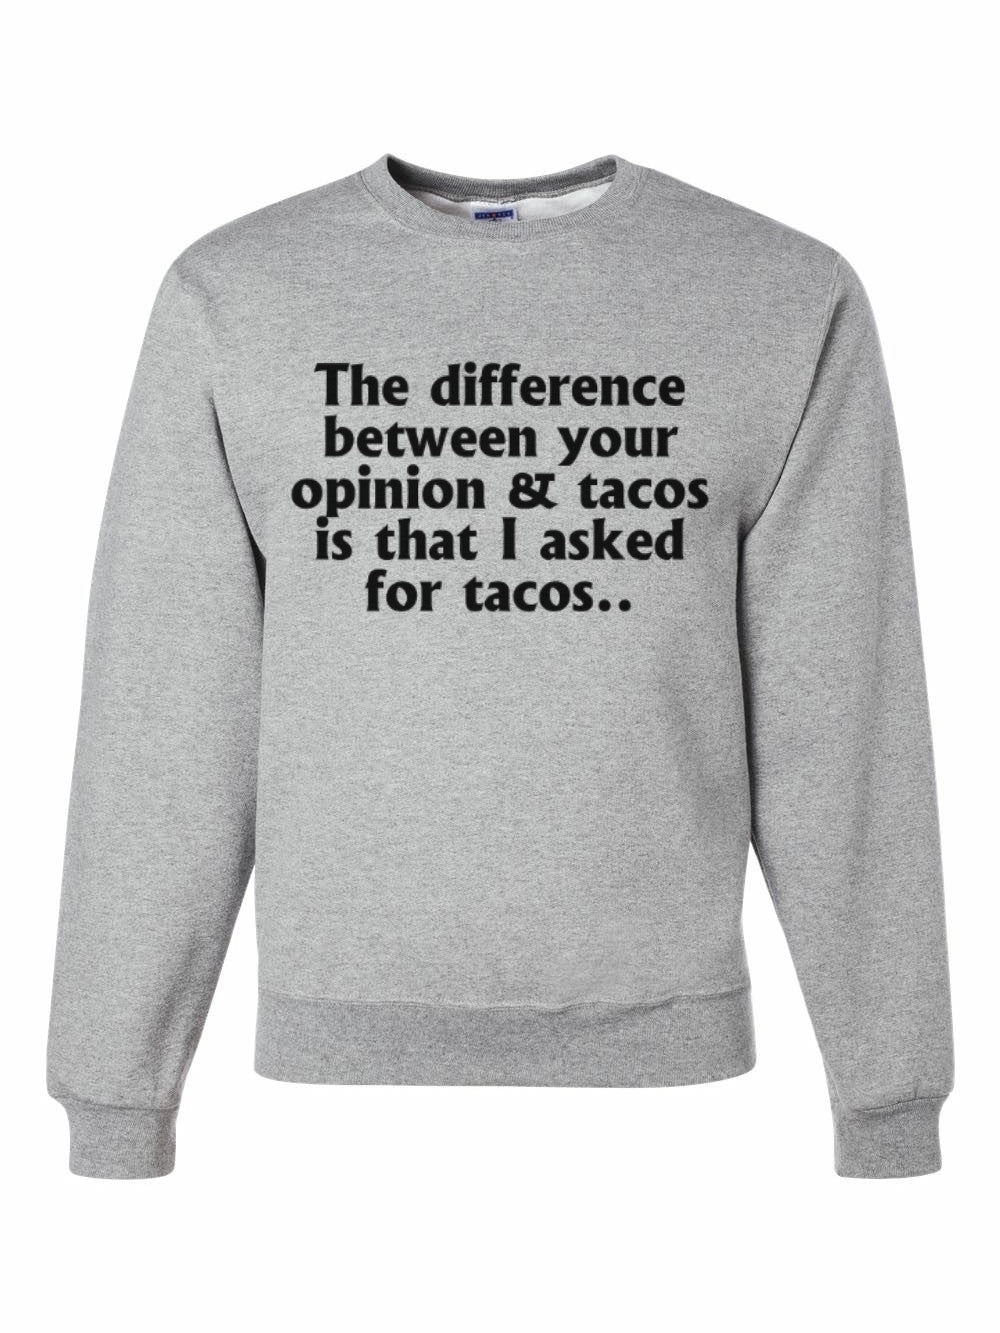 I asked for Tacos Sweatshirt